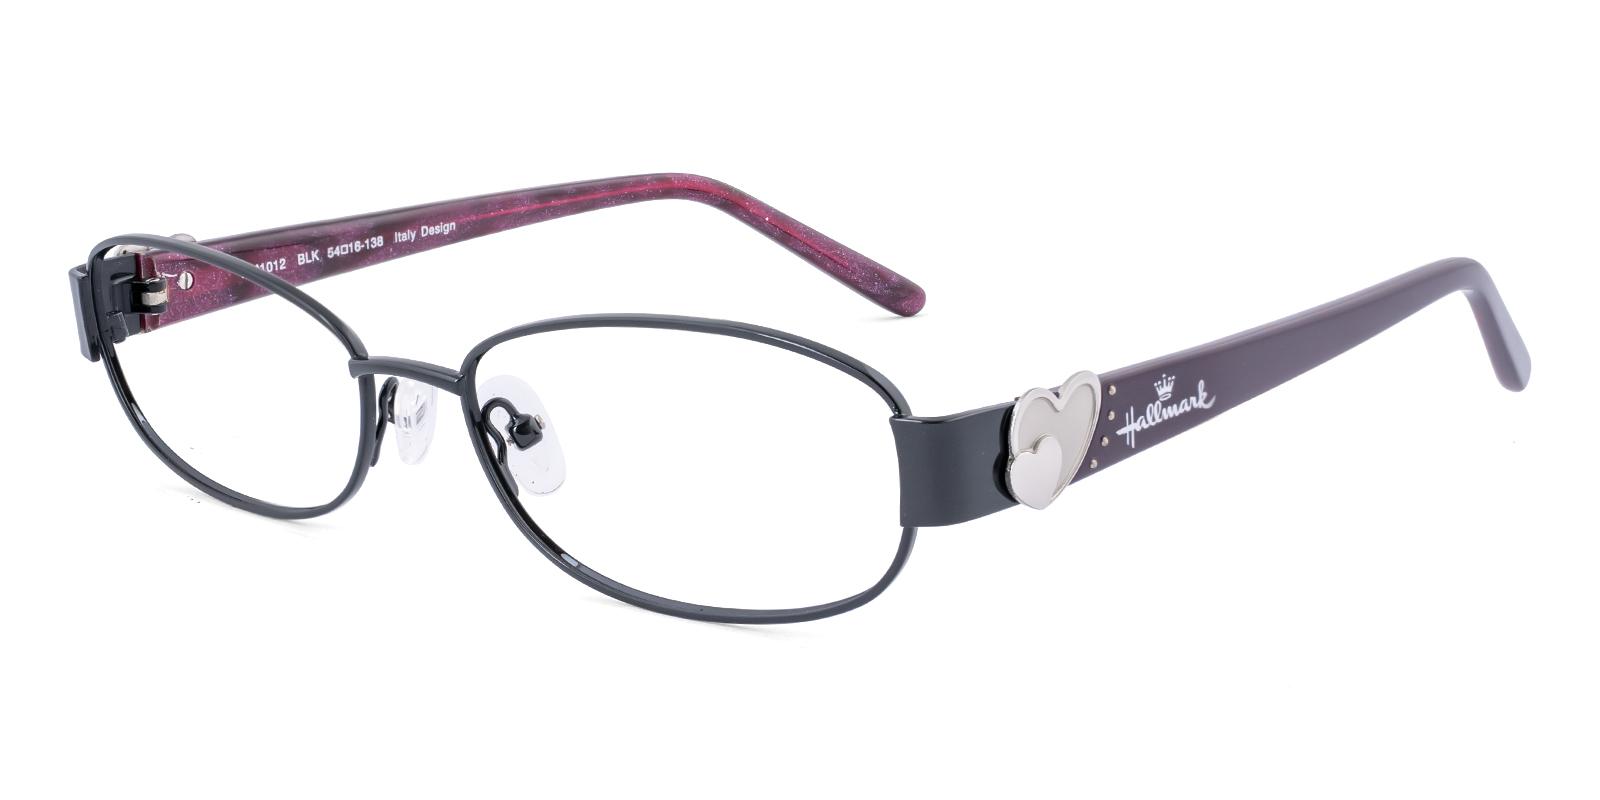 Muster Black Acetate , Metal Eyeglasses , NosePads Frames from ABBE Glasses